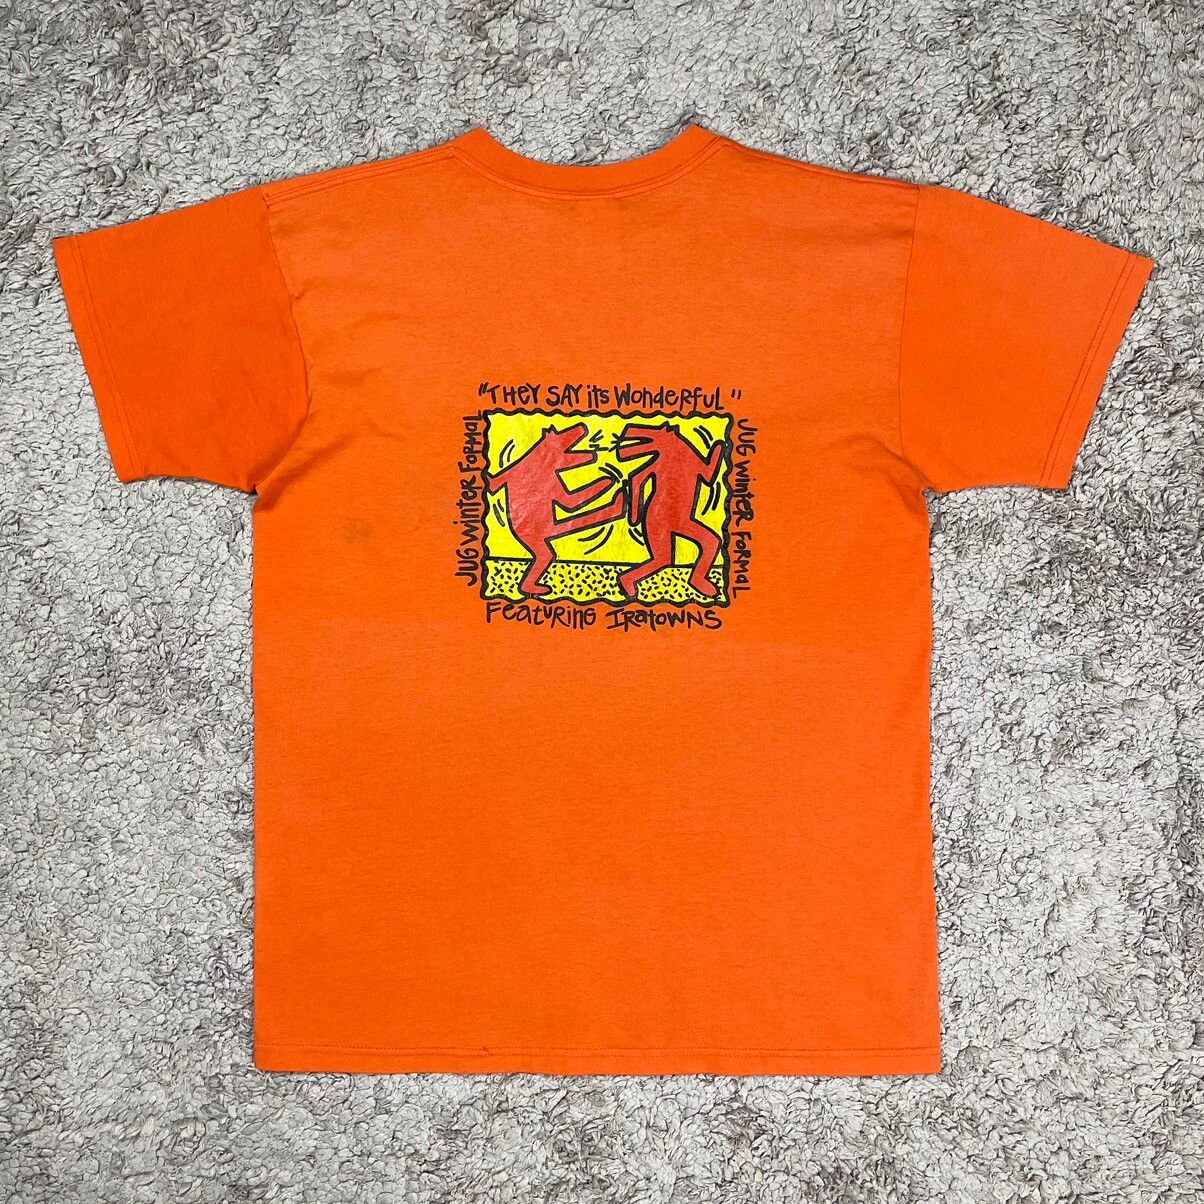 Vintage Vintage Art Keith Haring Parody T-shirt | Grailed